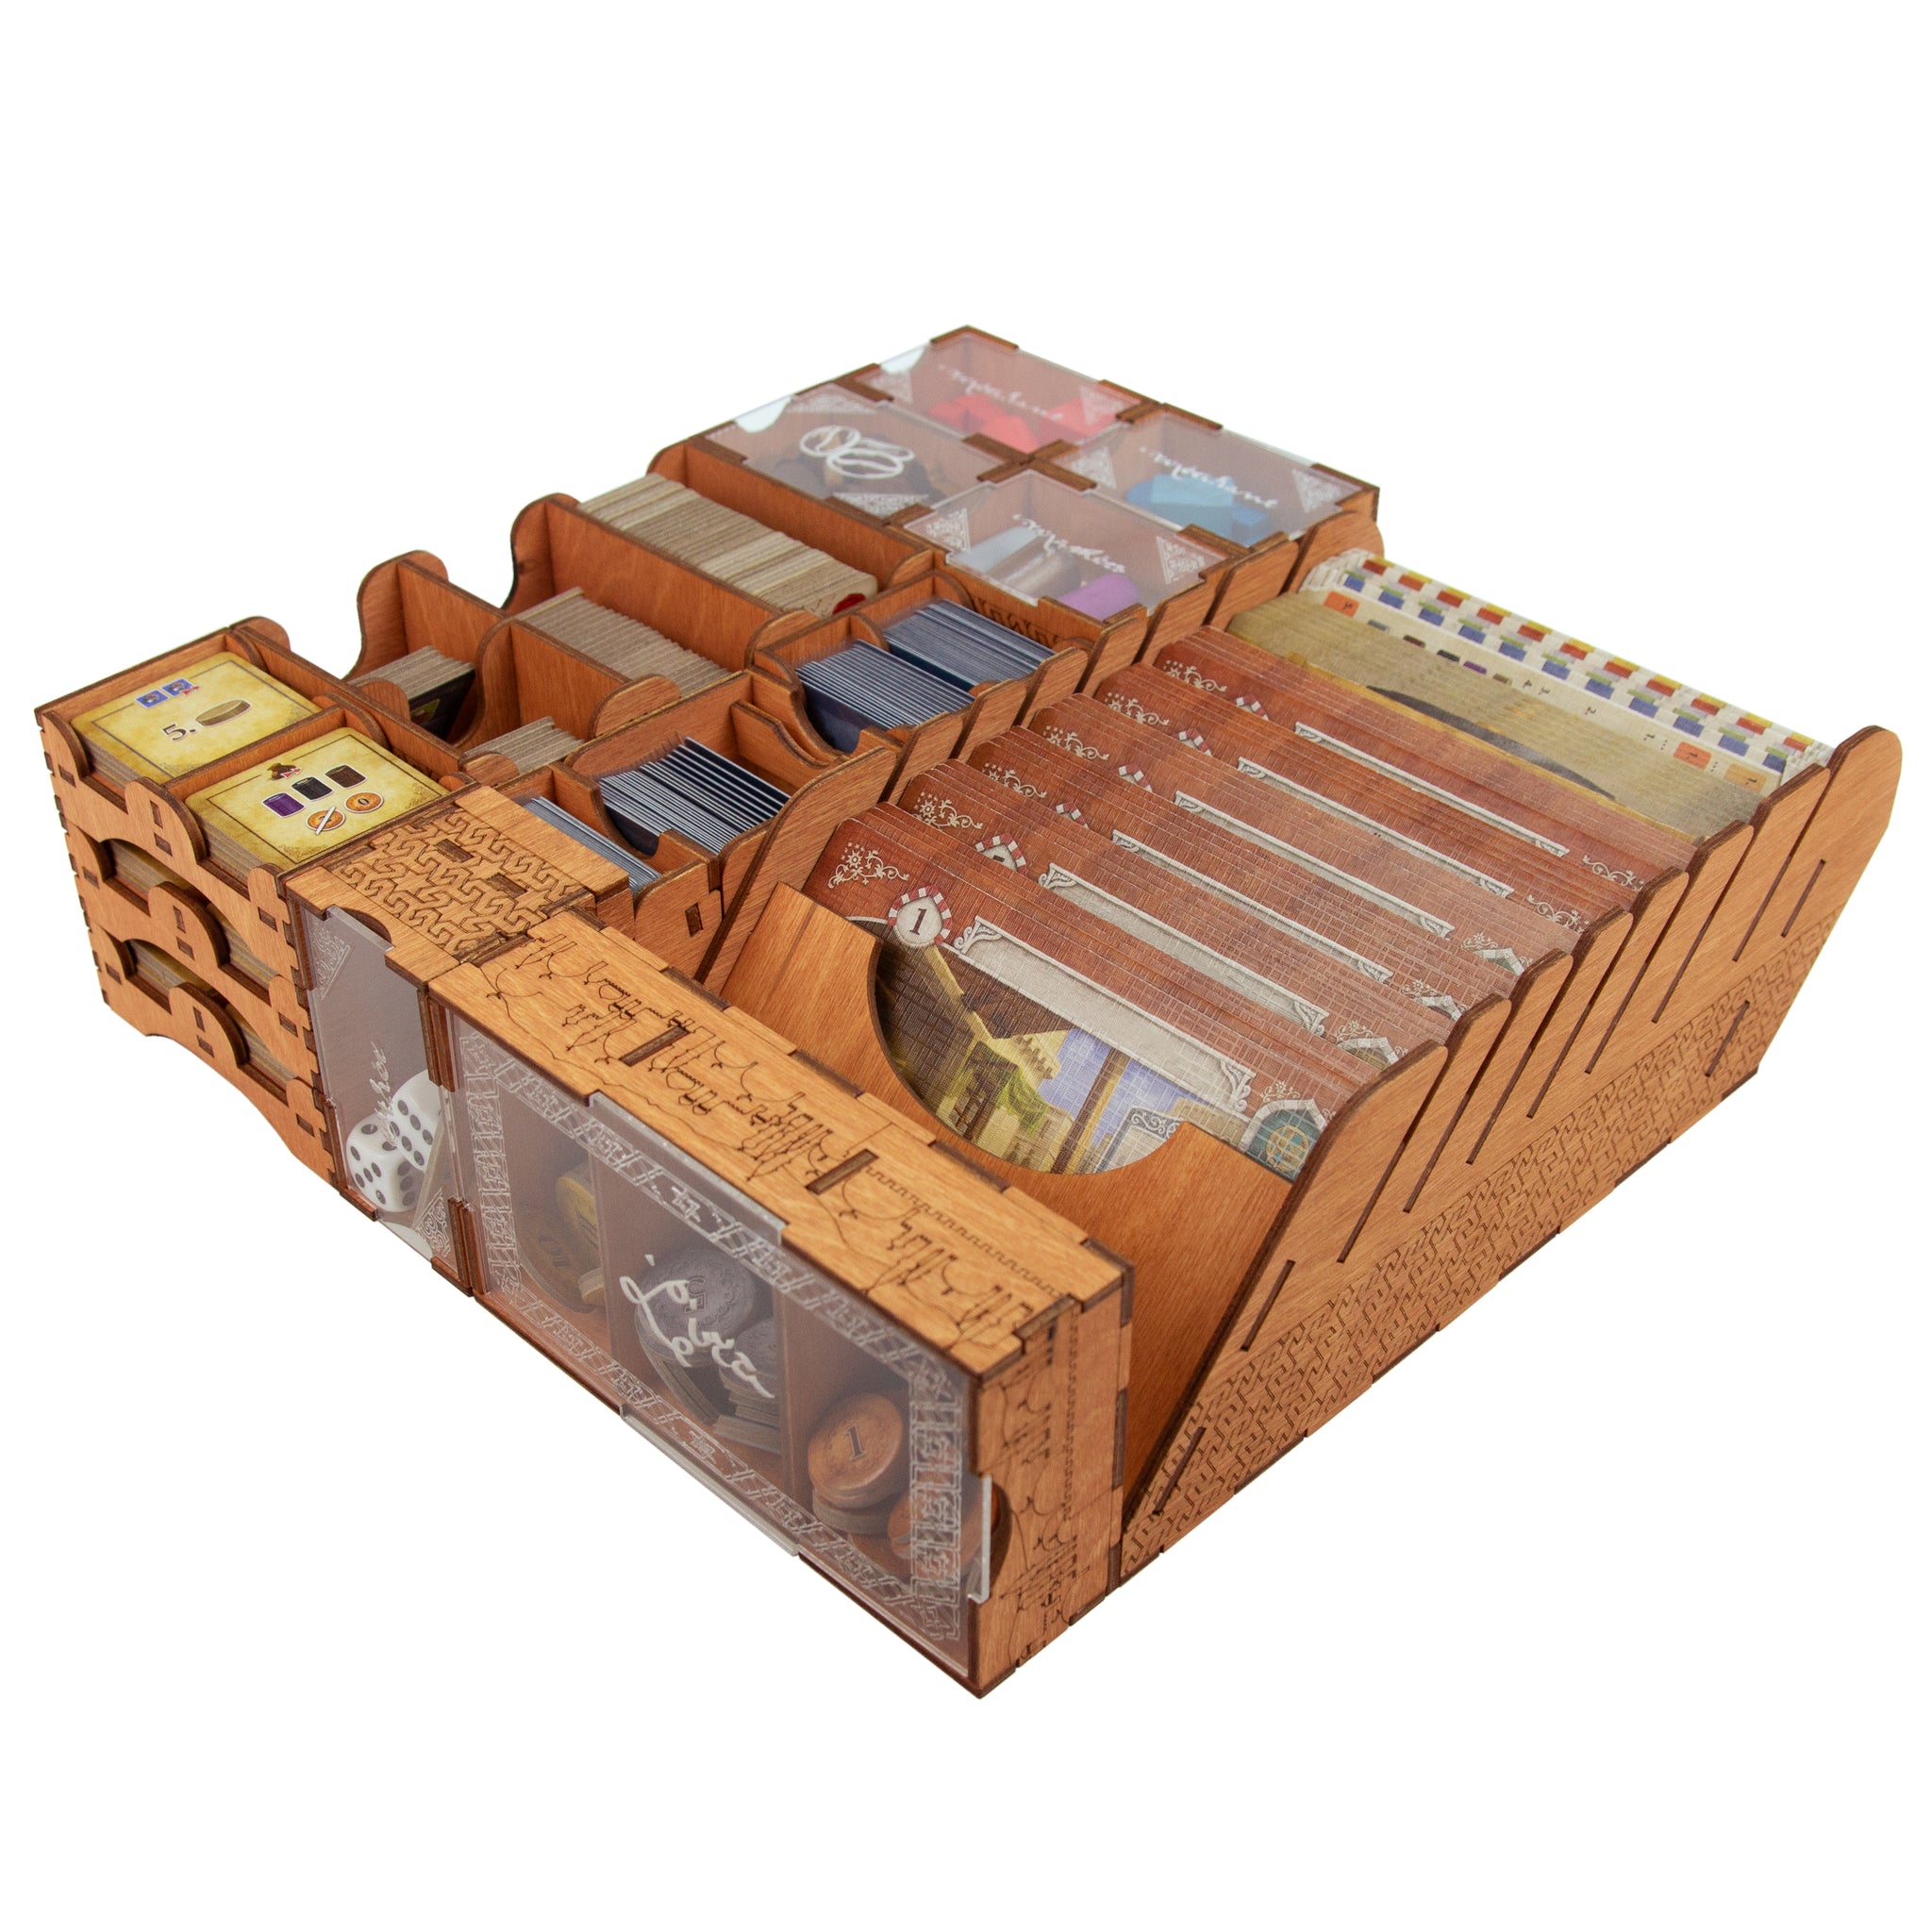 Istanbul Board Game Big Box Organizer Made of Wood –